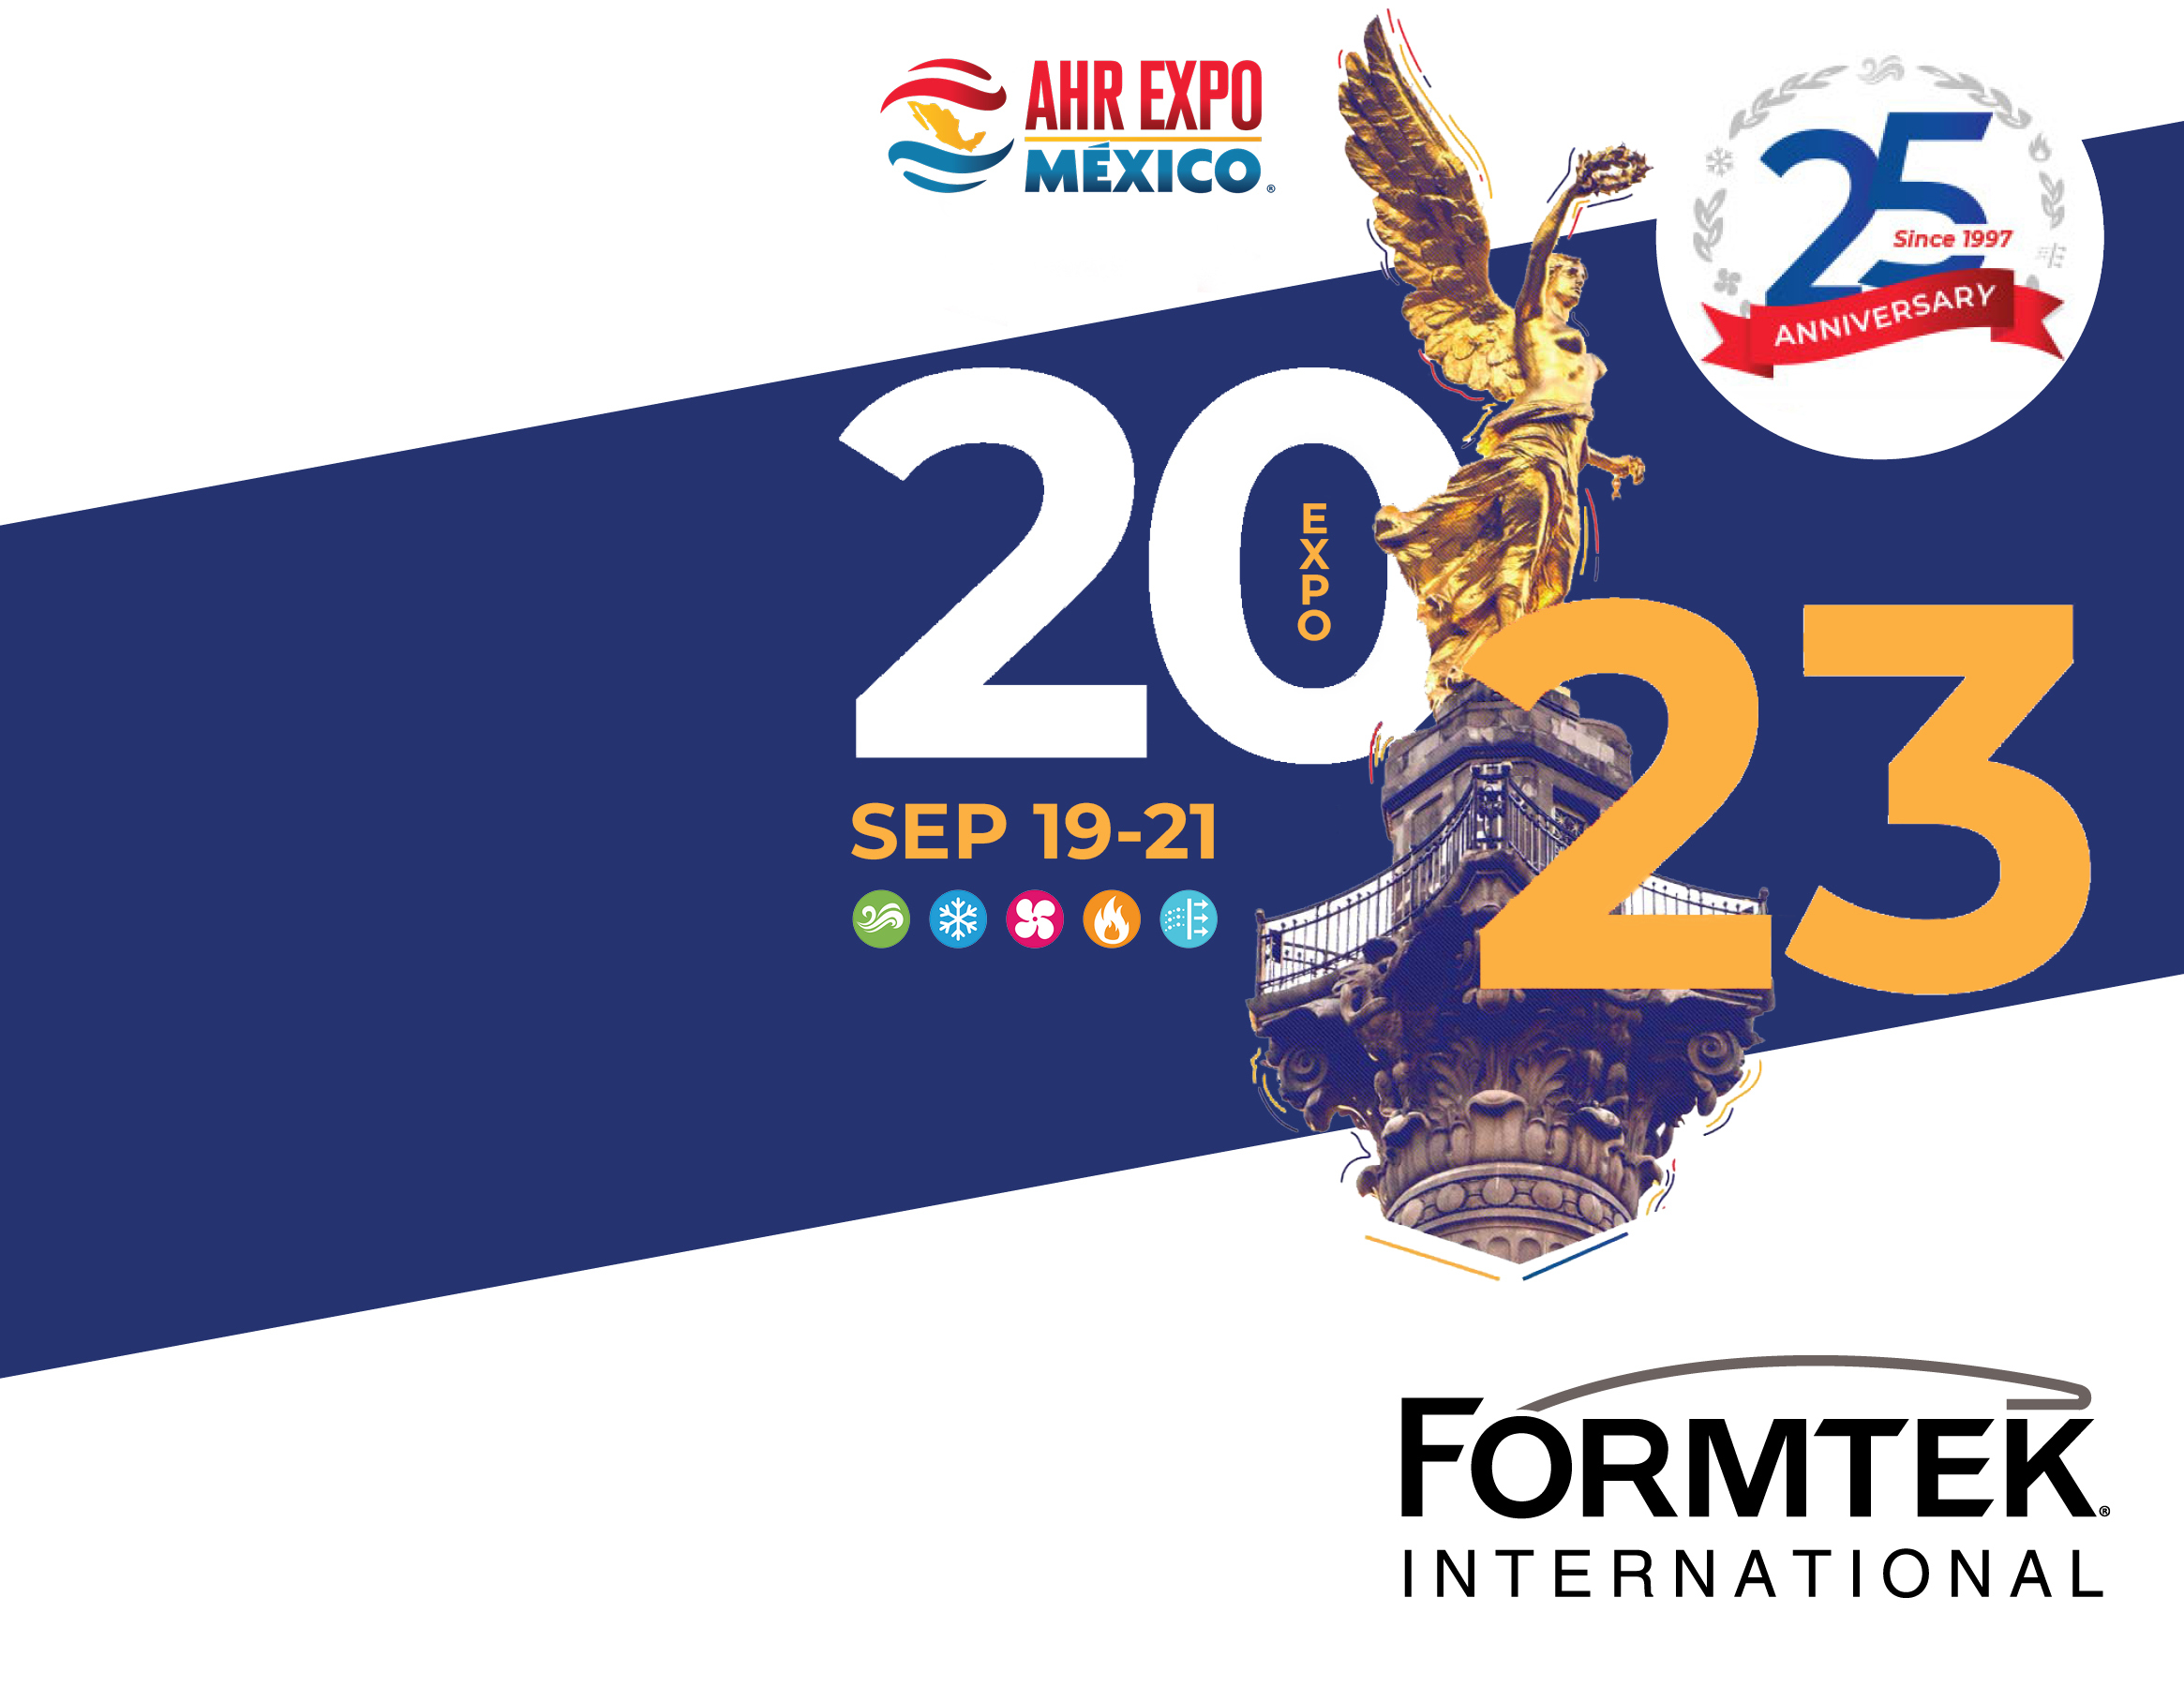 Formtek International Returns to Mexico City for AHR Expo Mexico 2023